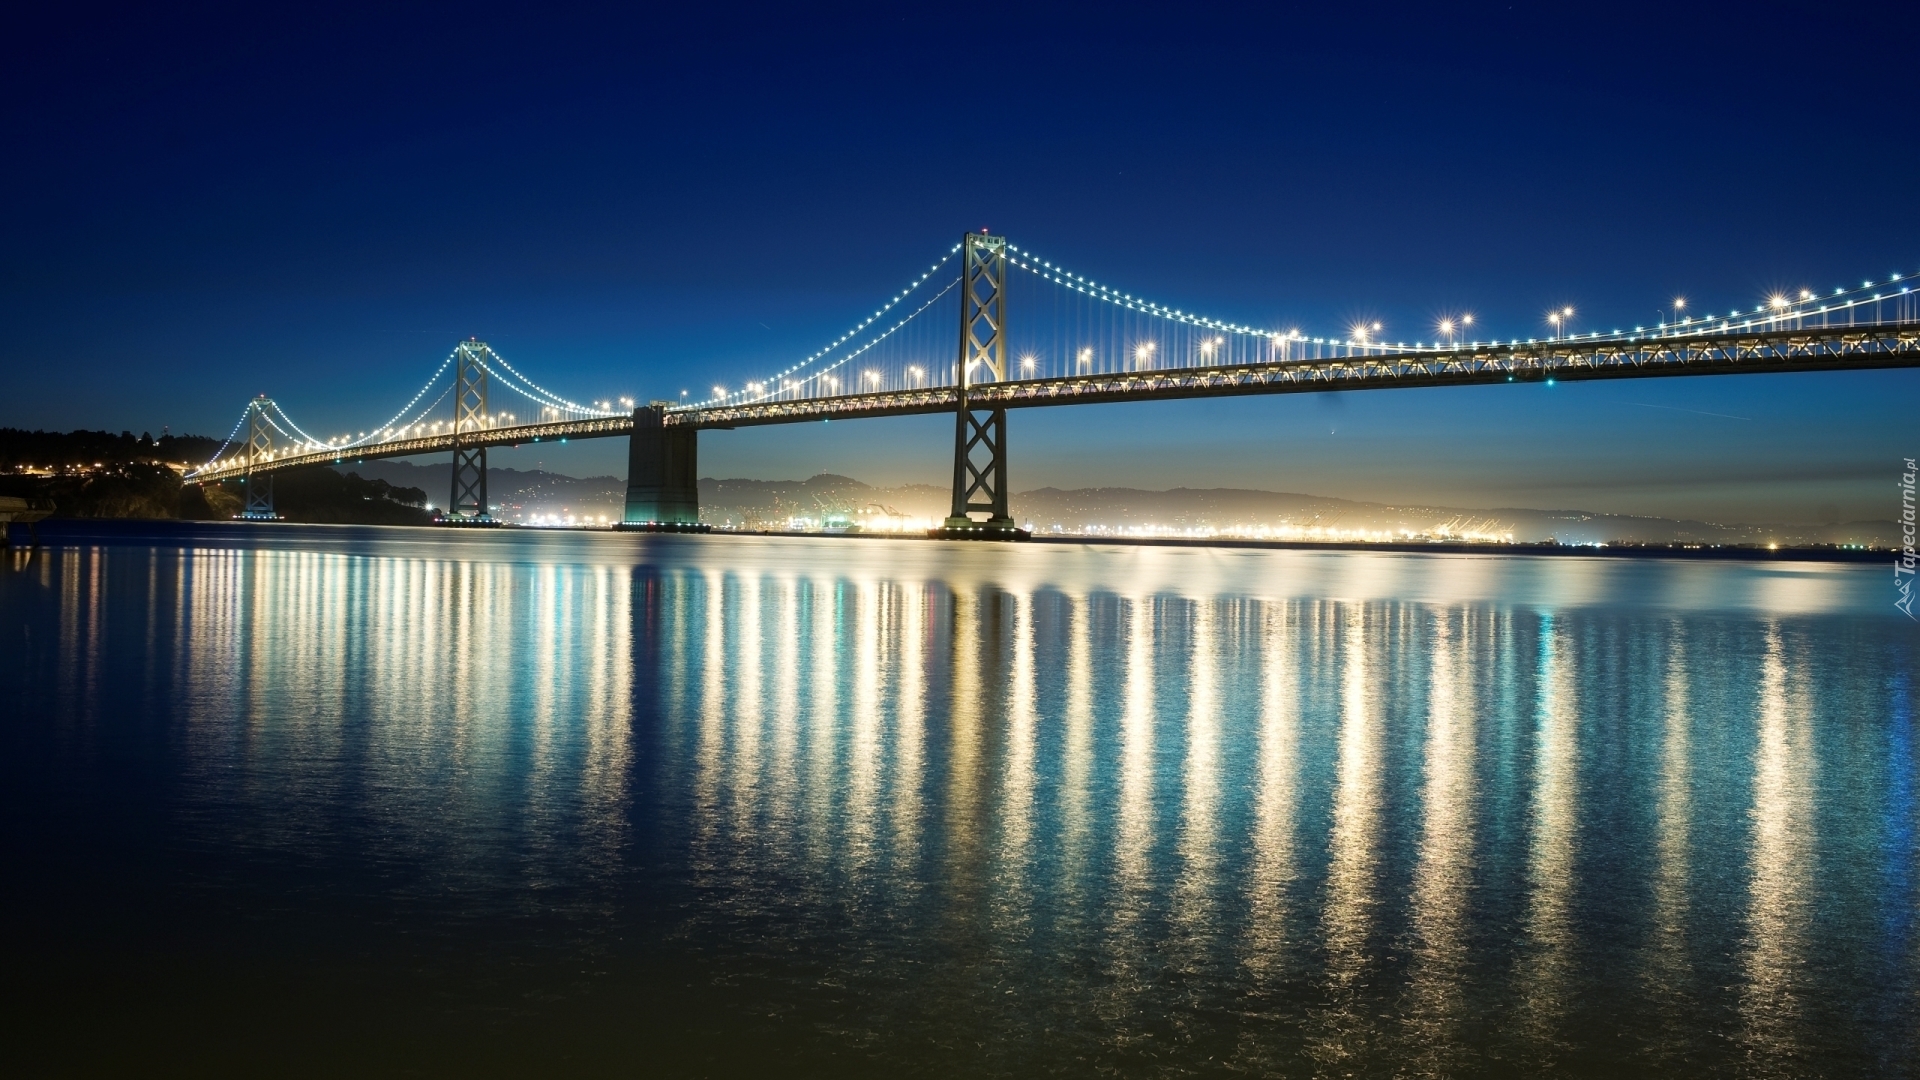 Stany Zjednoczone, Kalifornia, Most San Francisco-Oakland Bay Bridge, Rzeka, Noc